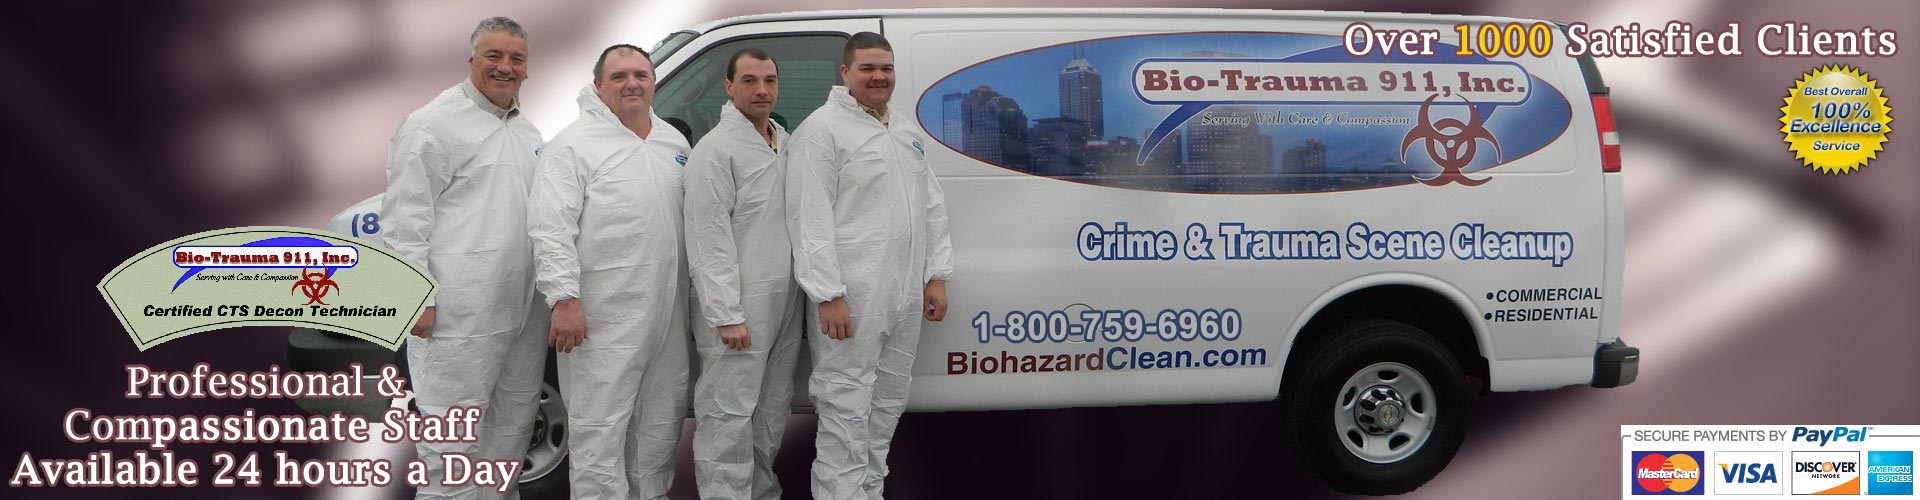 Crime Scene Cleanup Technicians